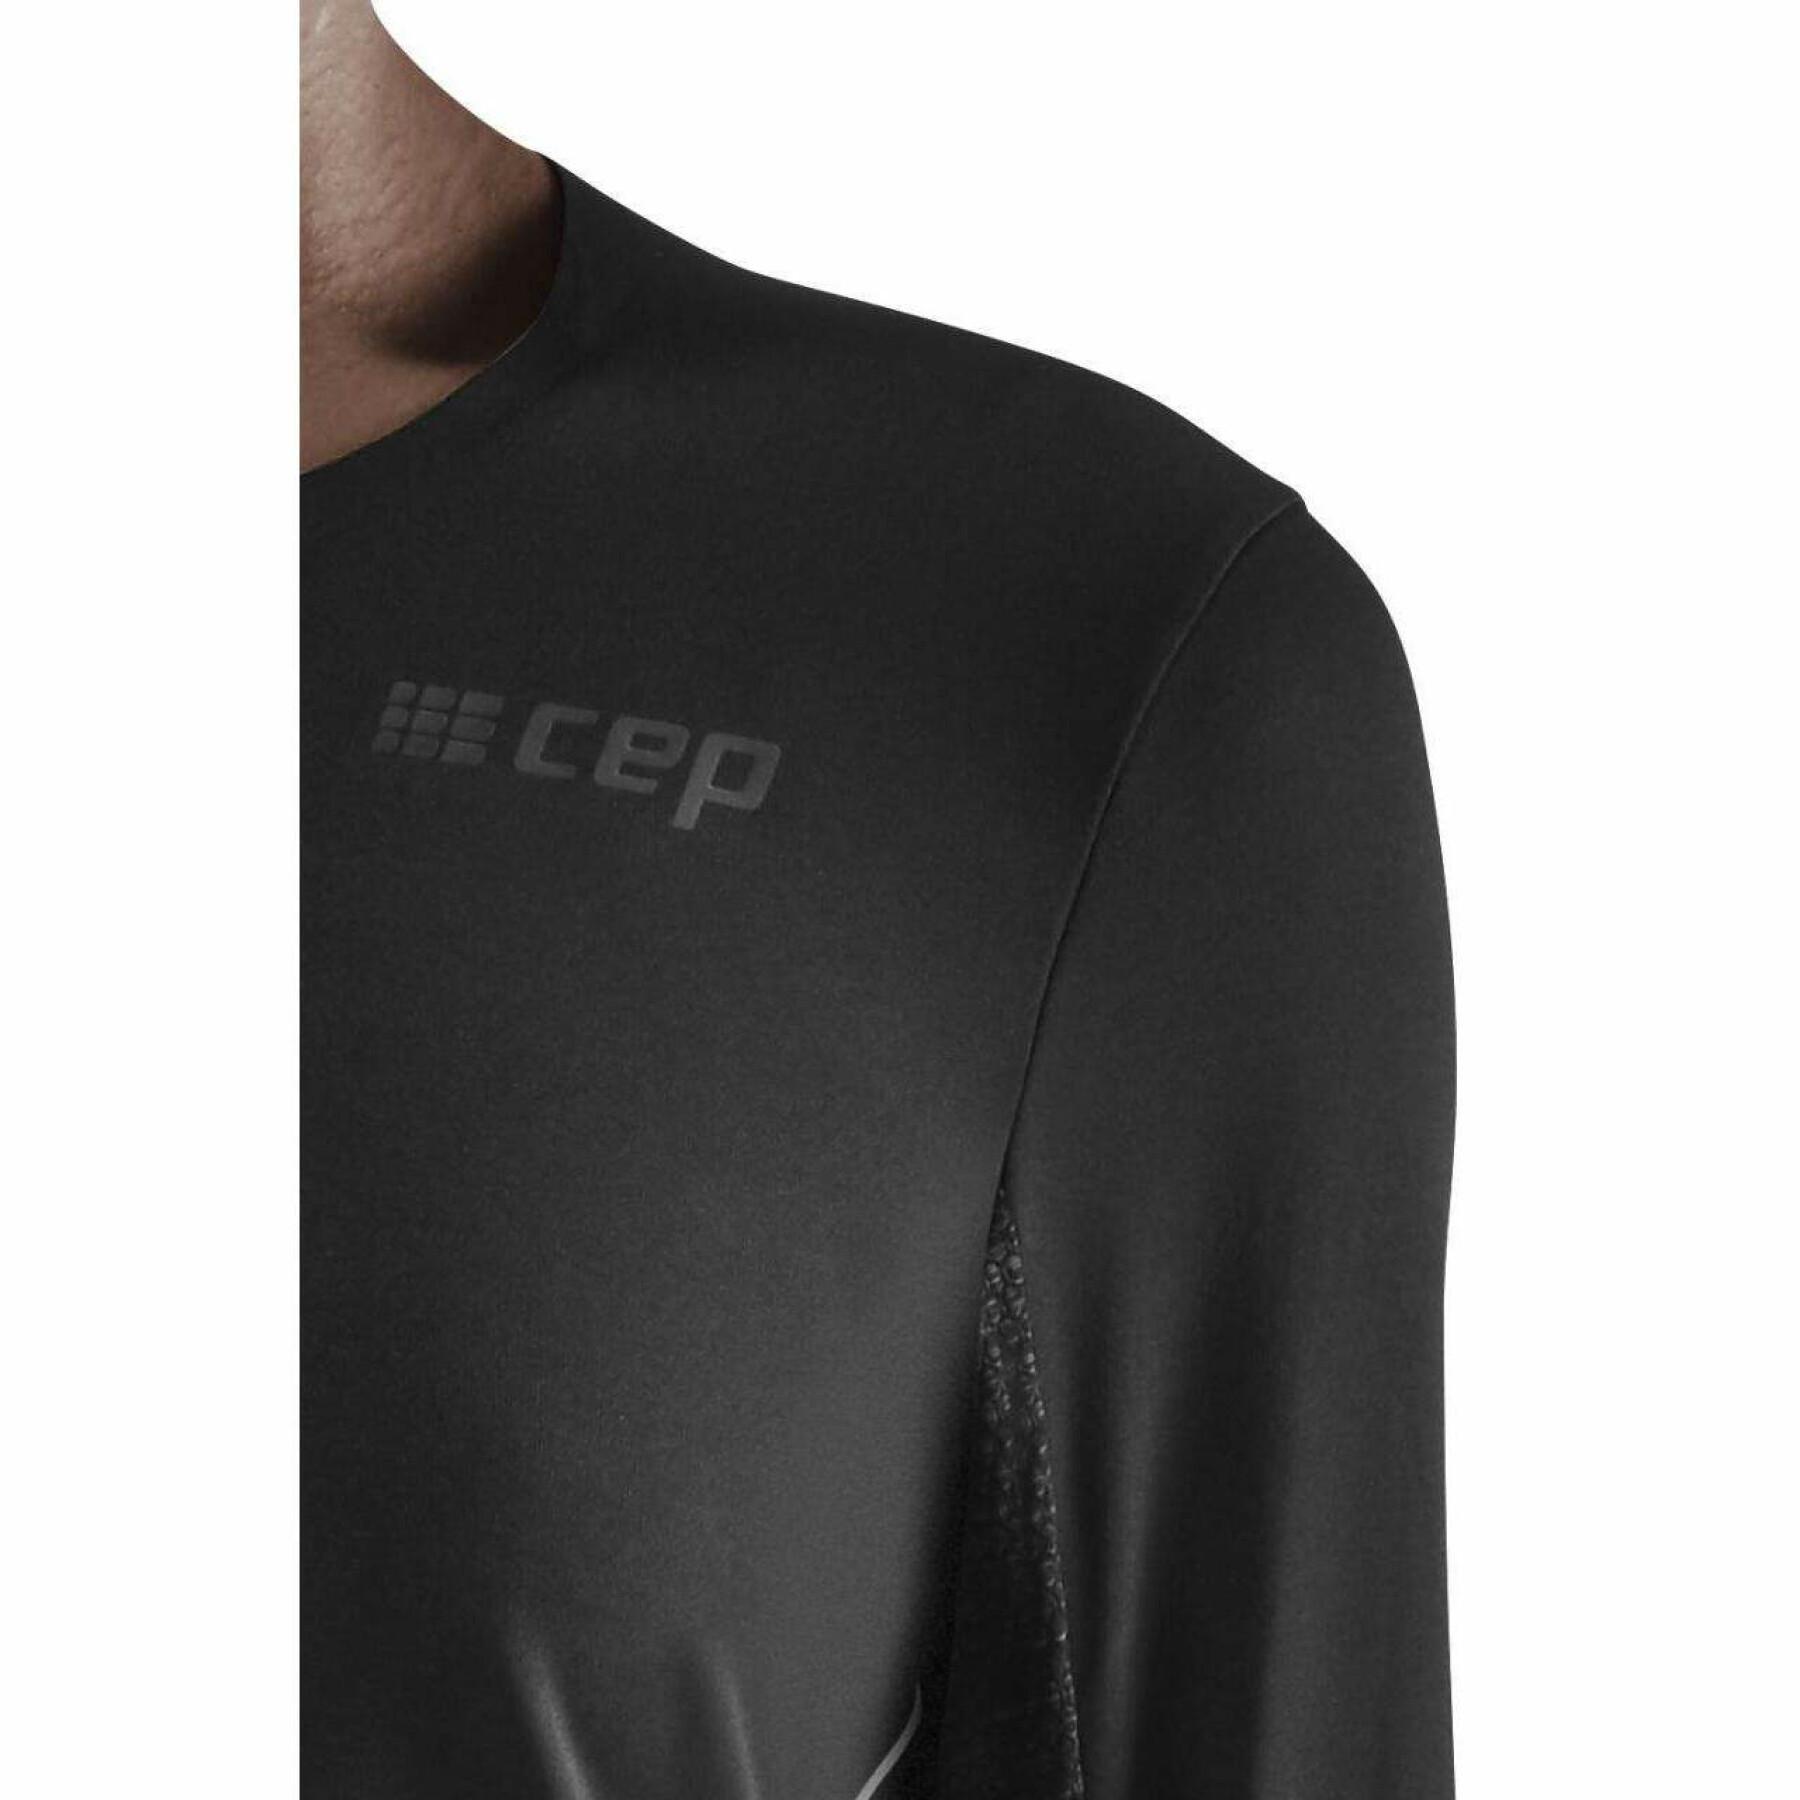 Camiseta de running de manga larga para mujer CEP Compression